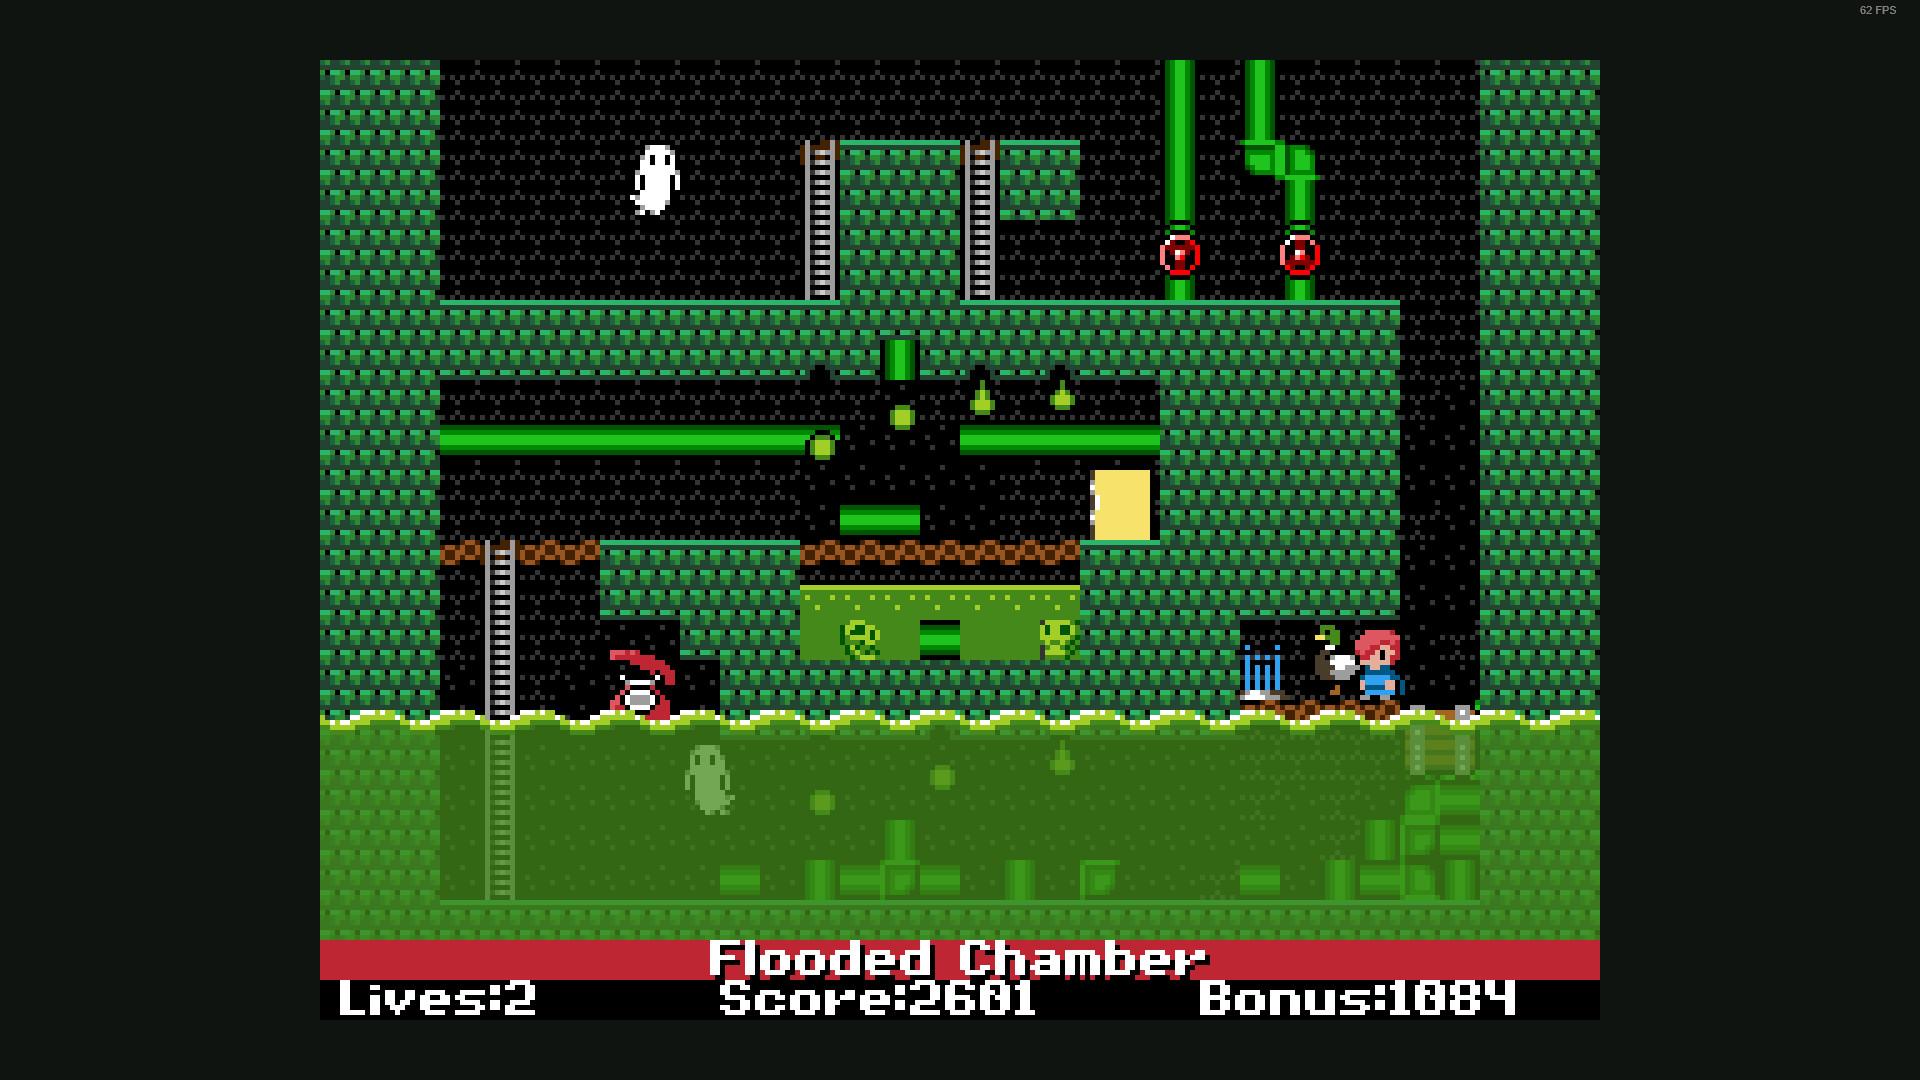 Screenshot №7 from game Rising Runner